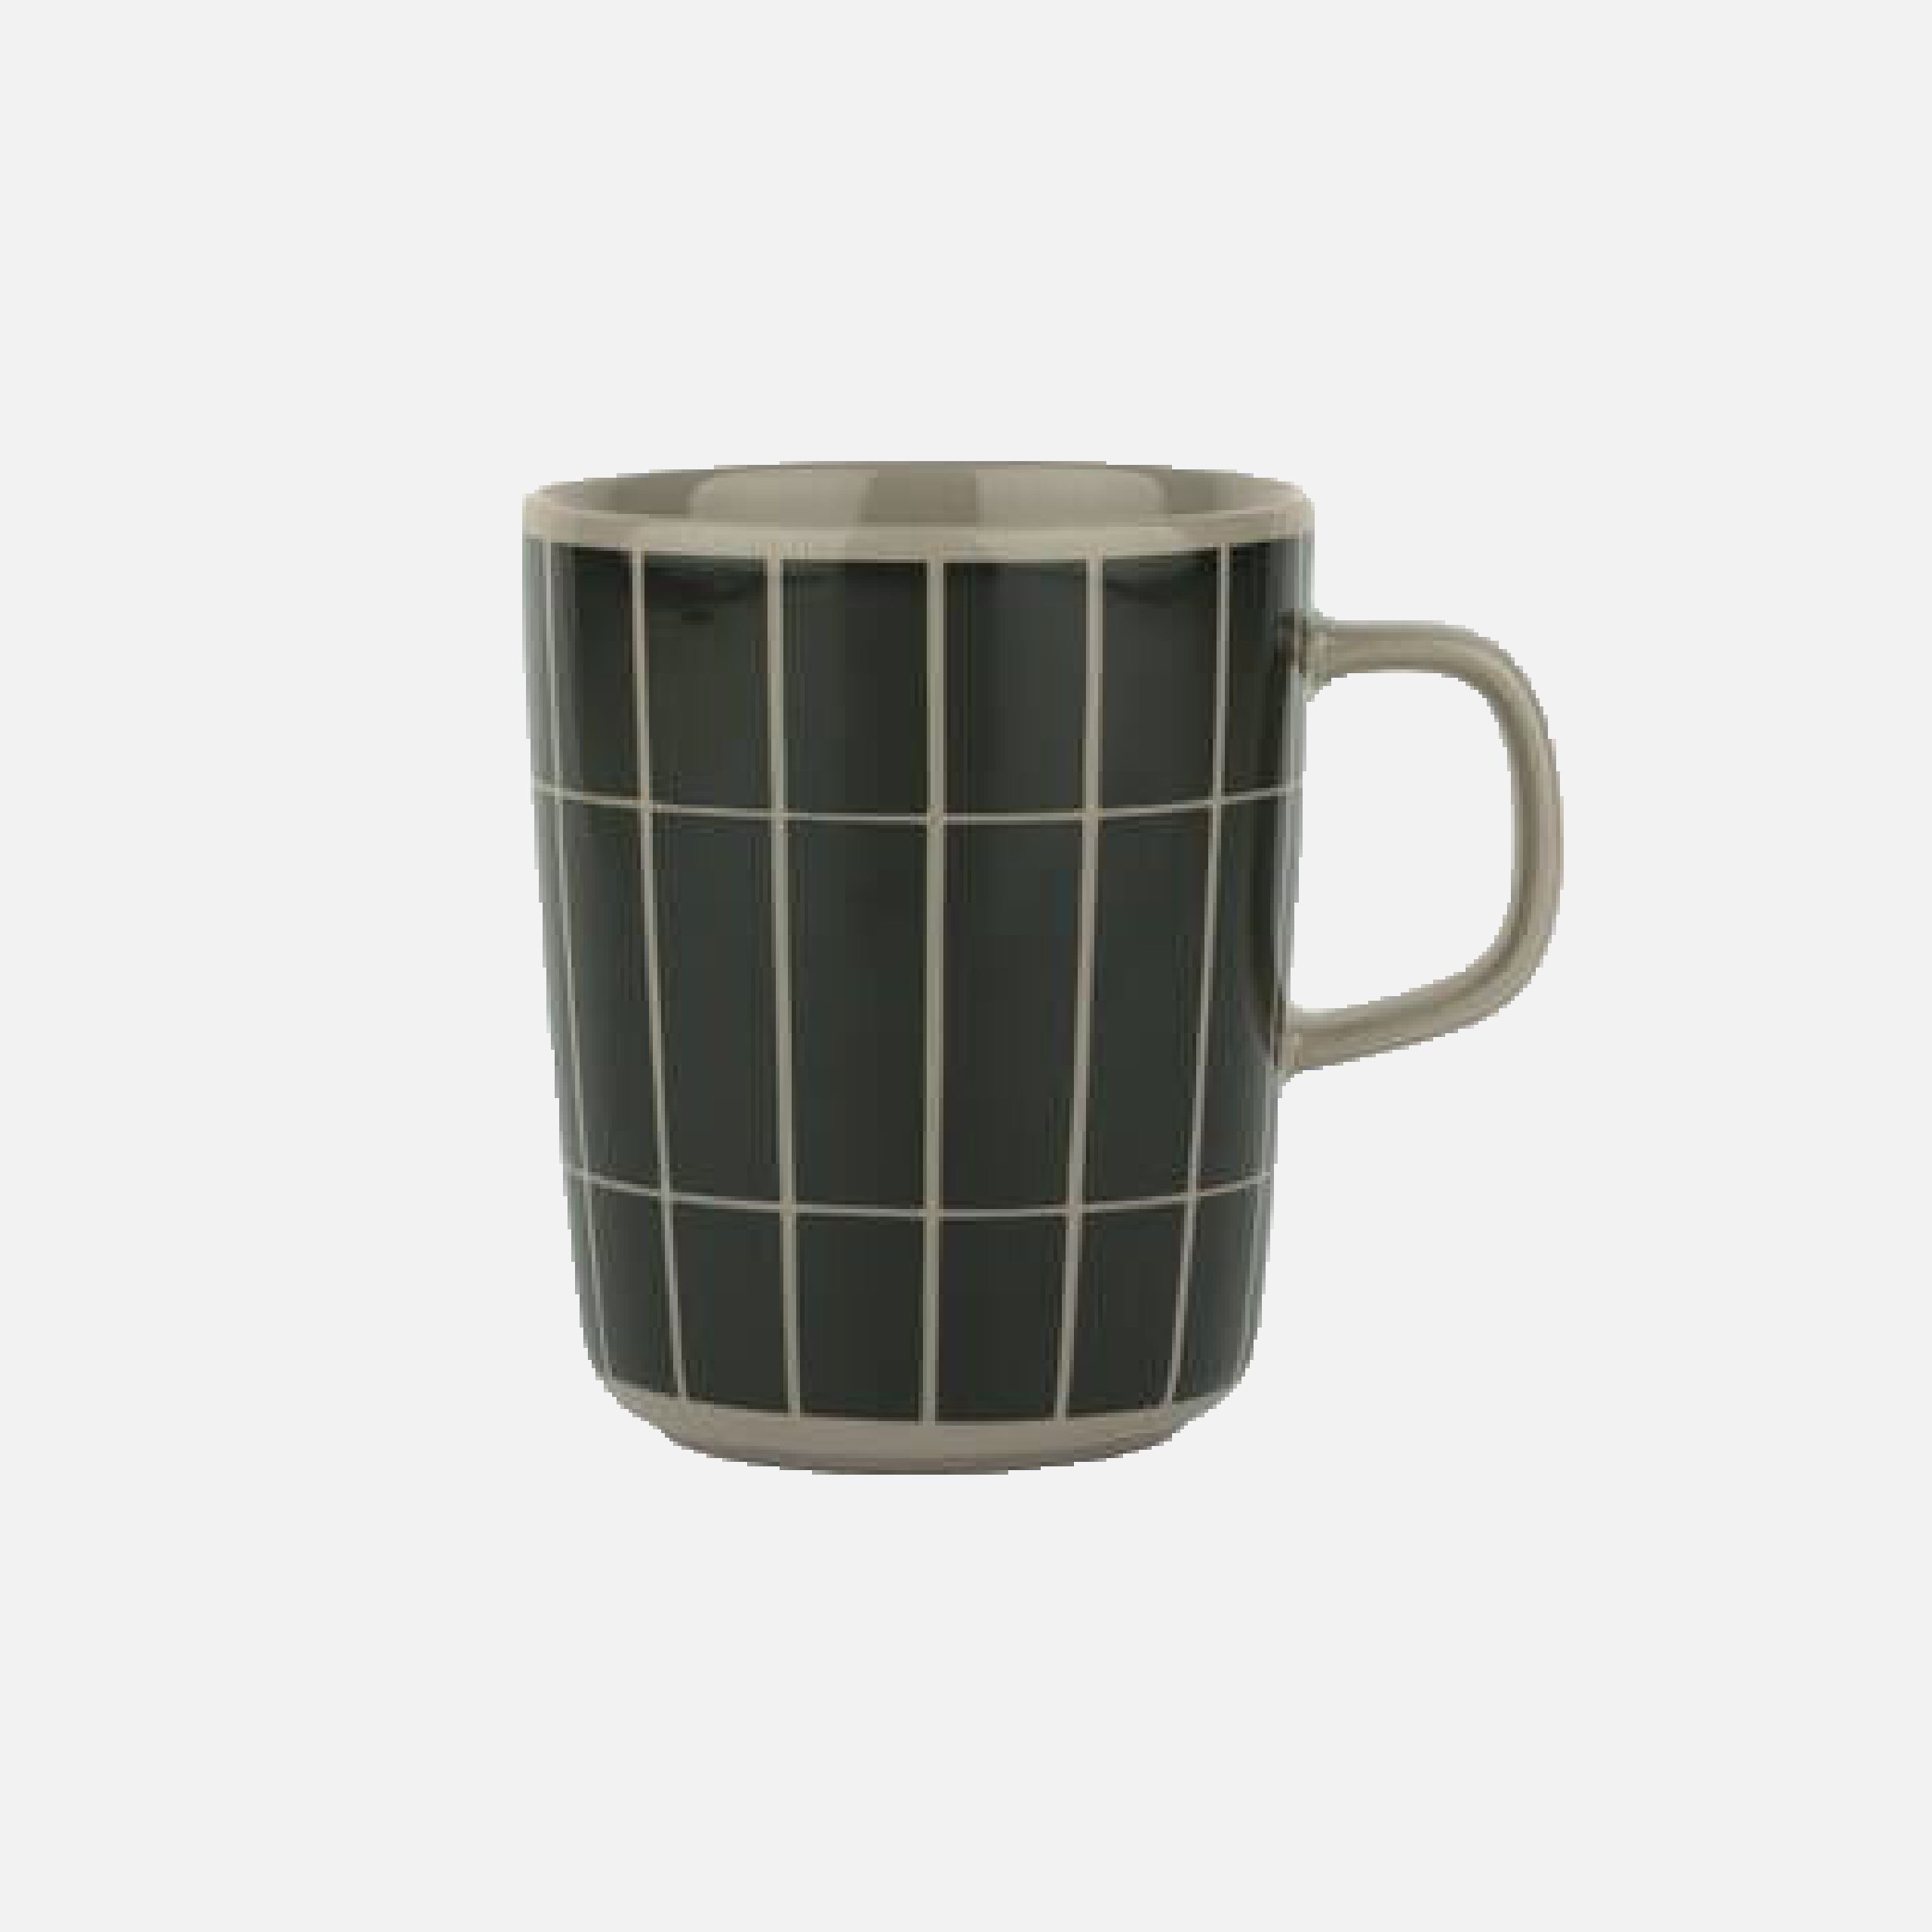 Tiiliskivi mug 2,5dl dark green/terra